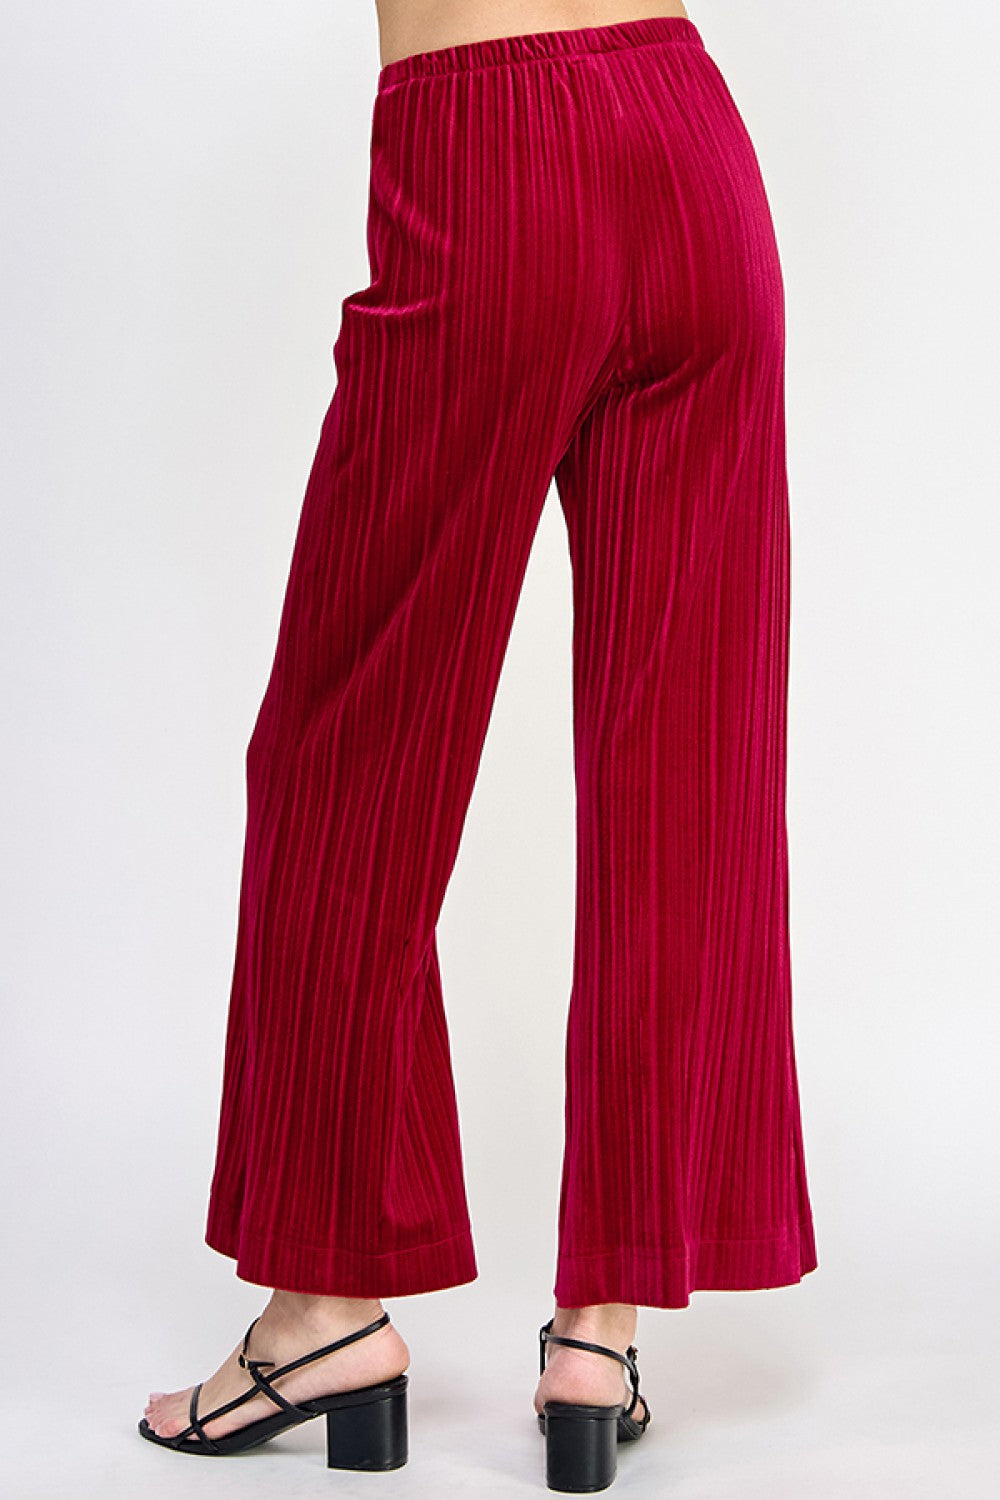 Cranberry Pleated Velvet Pants